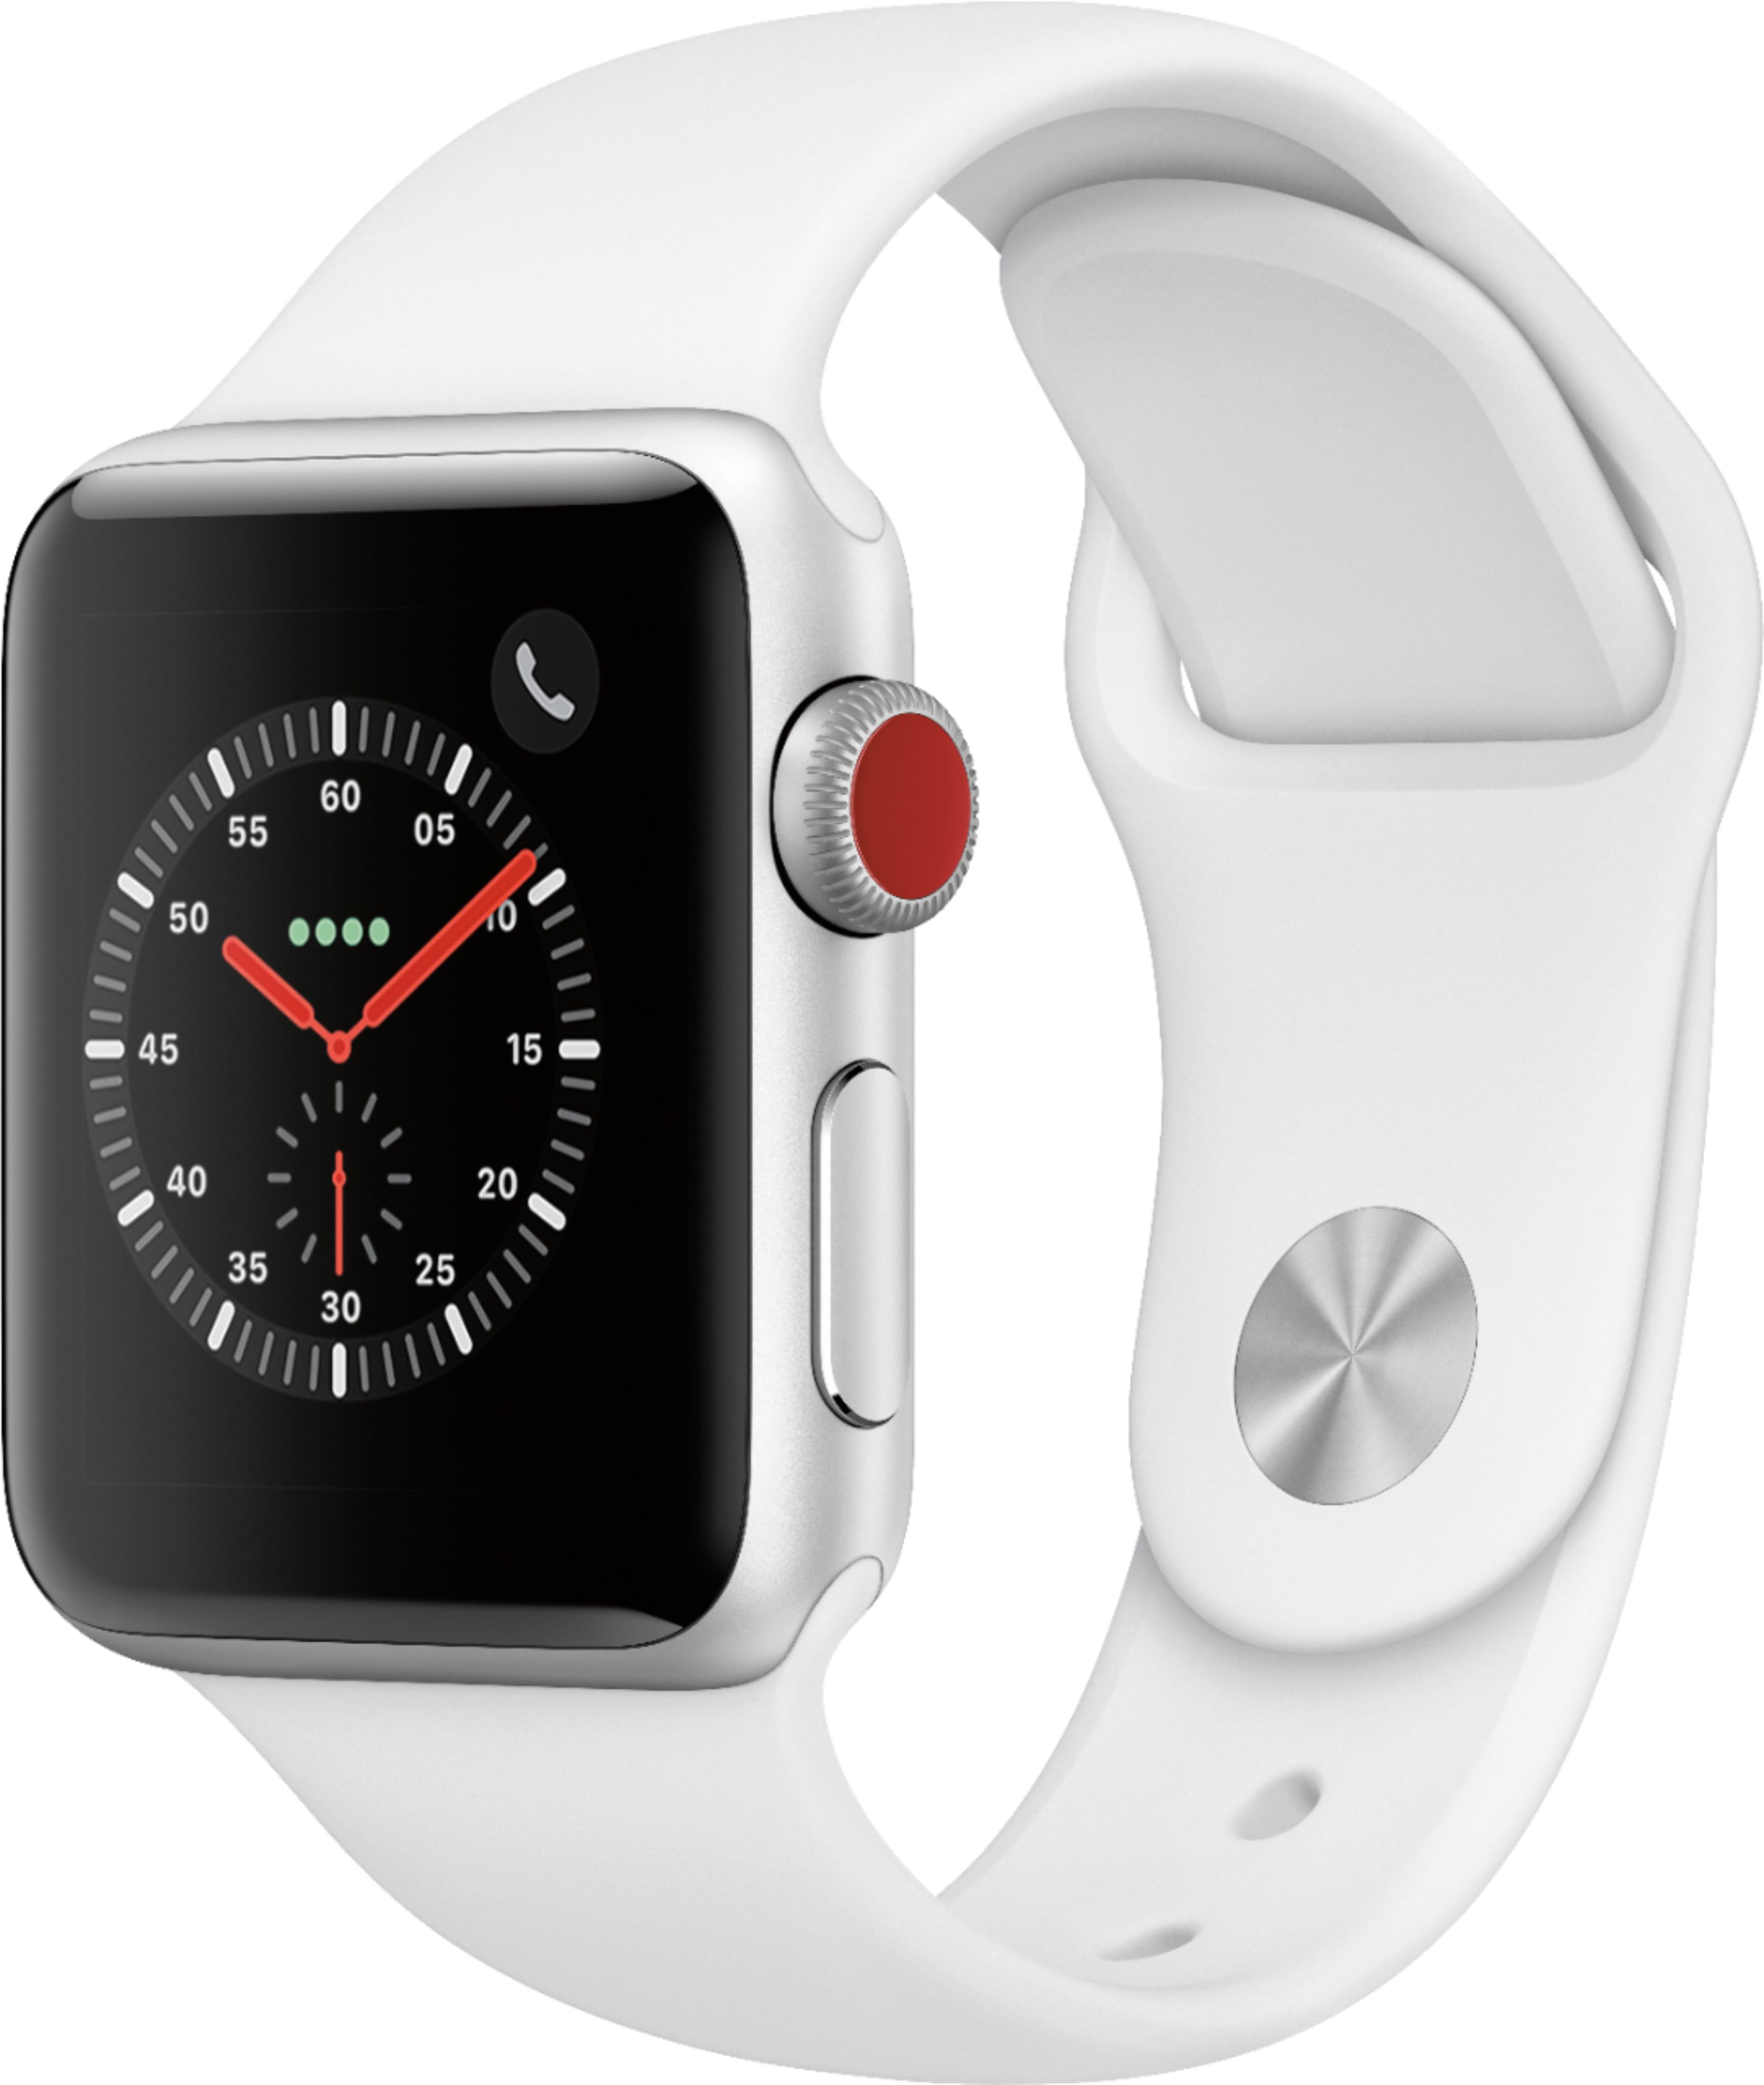 Apple watch Series3 セルラーモデル - 時計